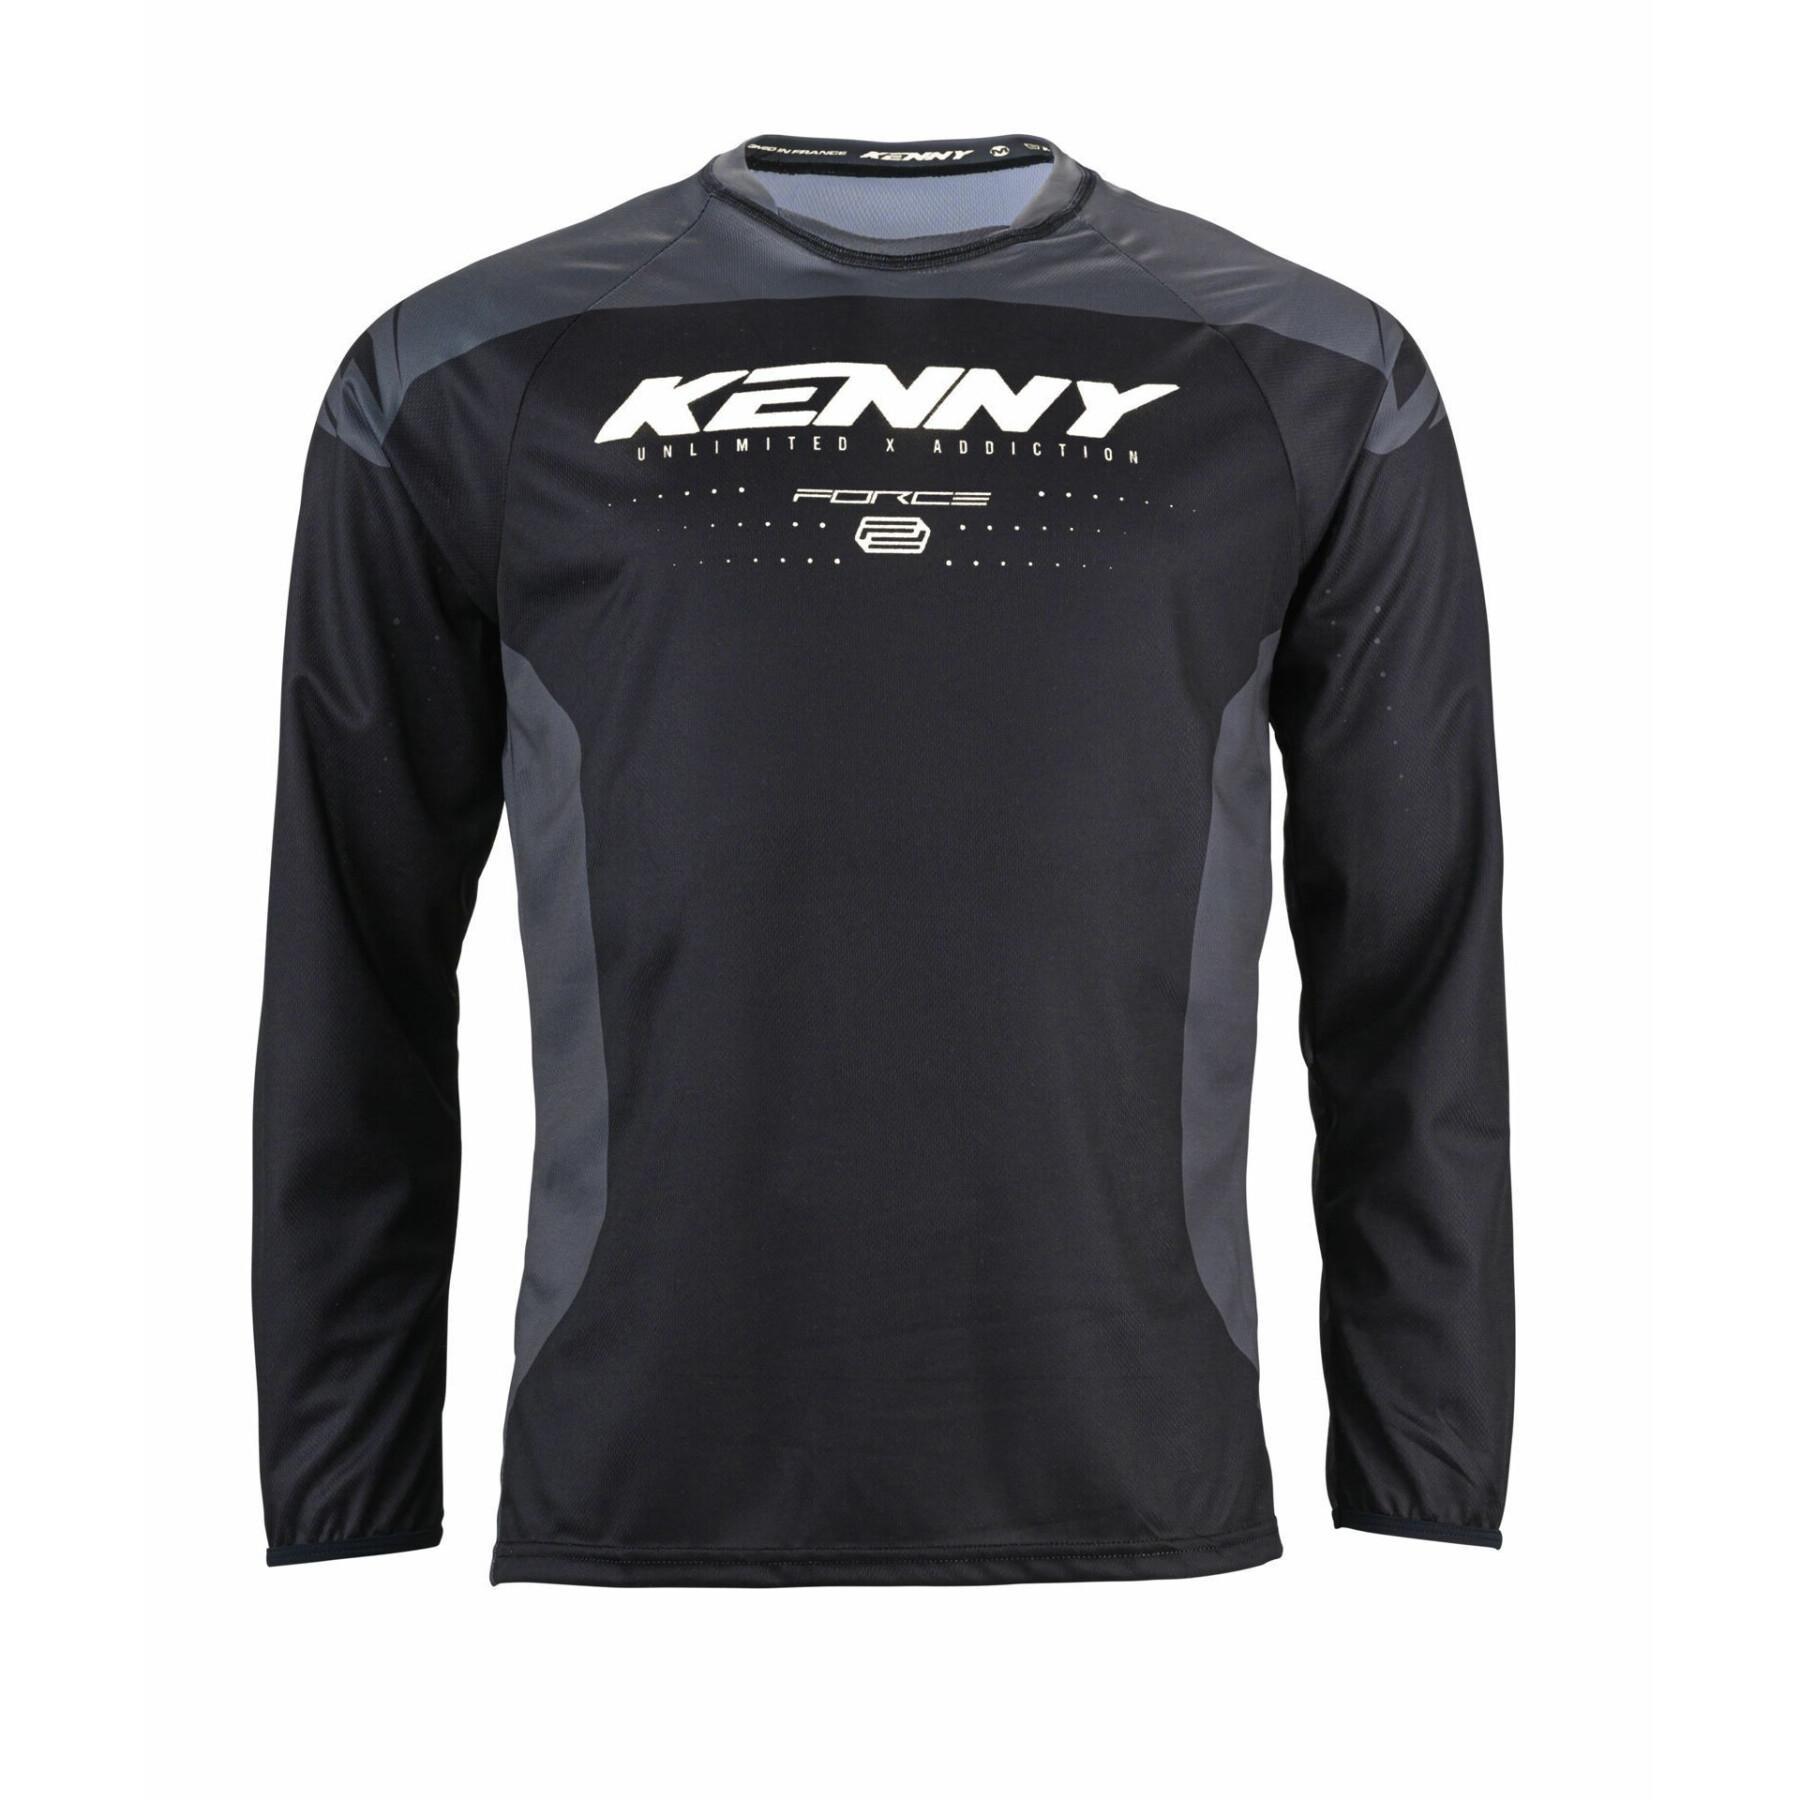 Camiseta moto cross Kenny Froce